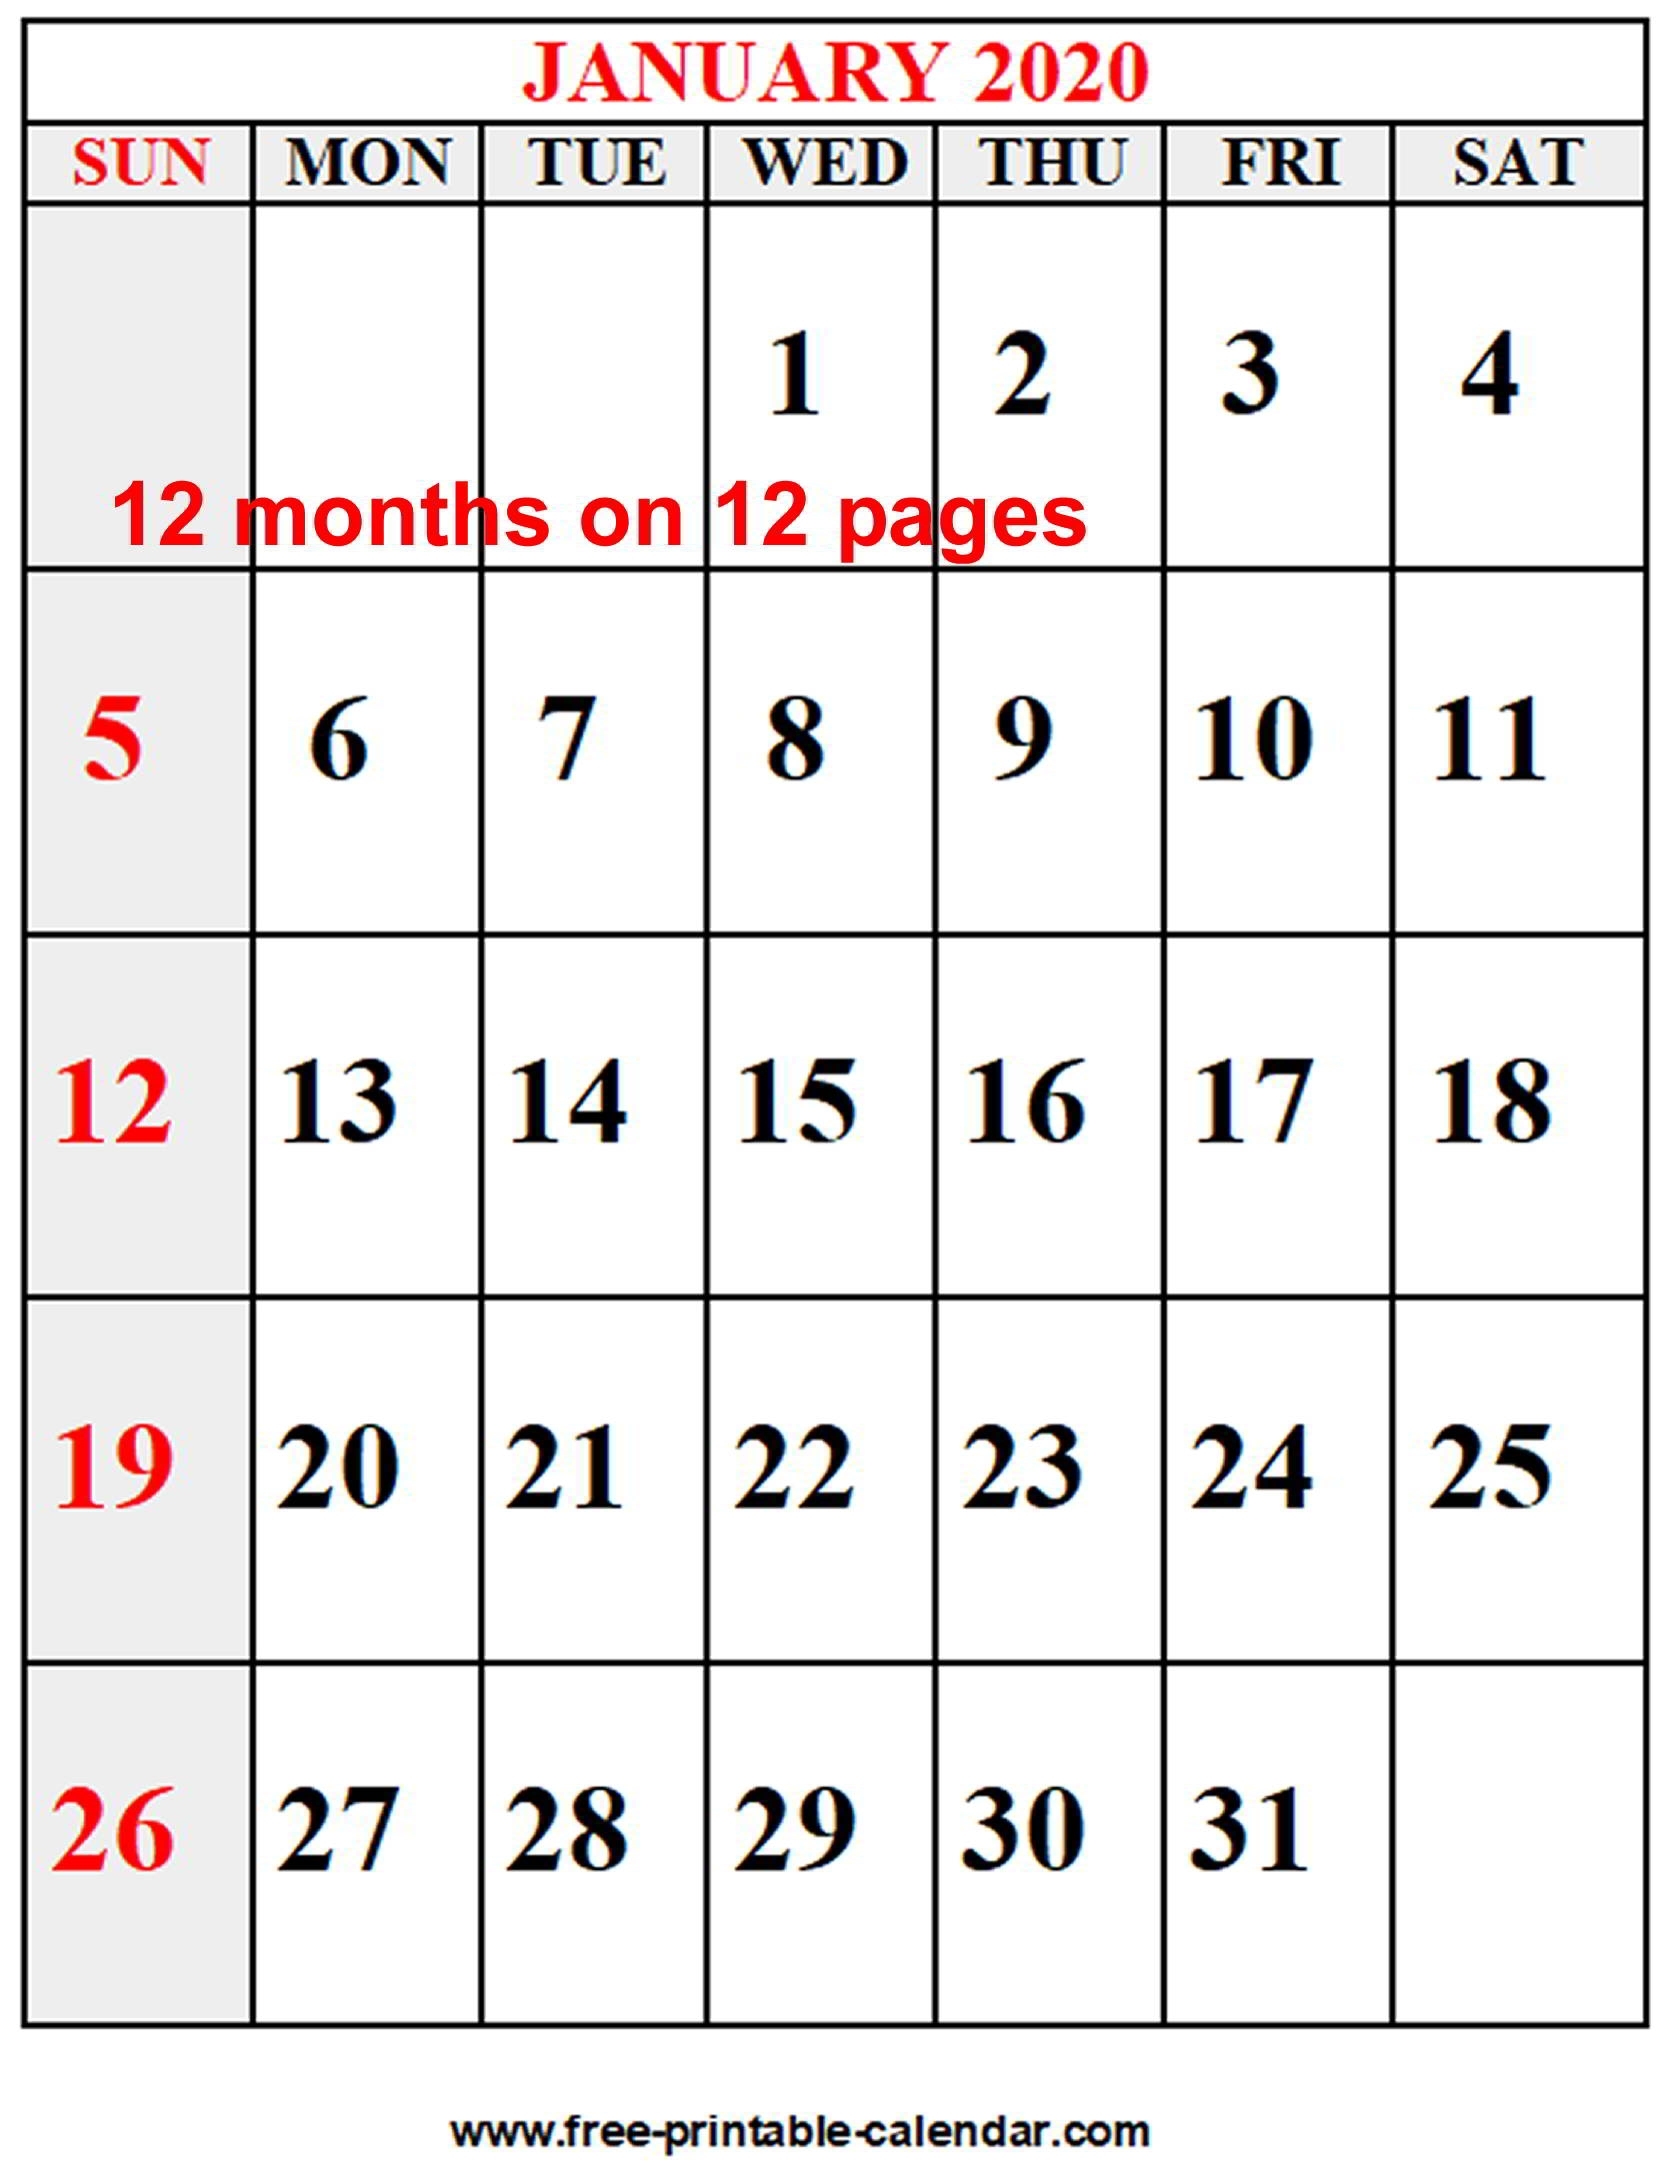 Year 2020 Calendar - Free-Printable-Calendar